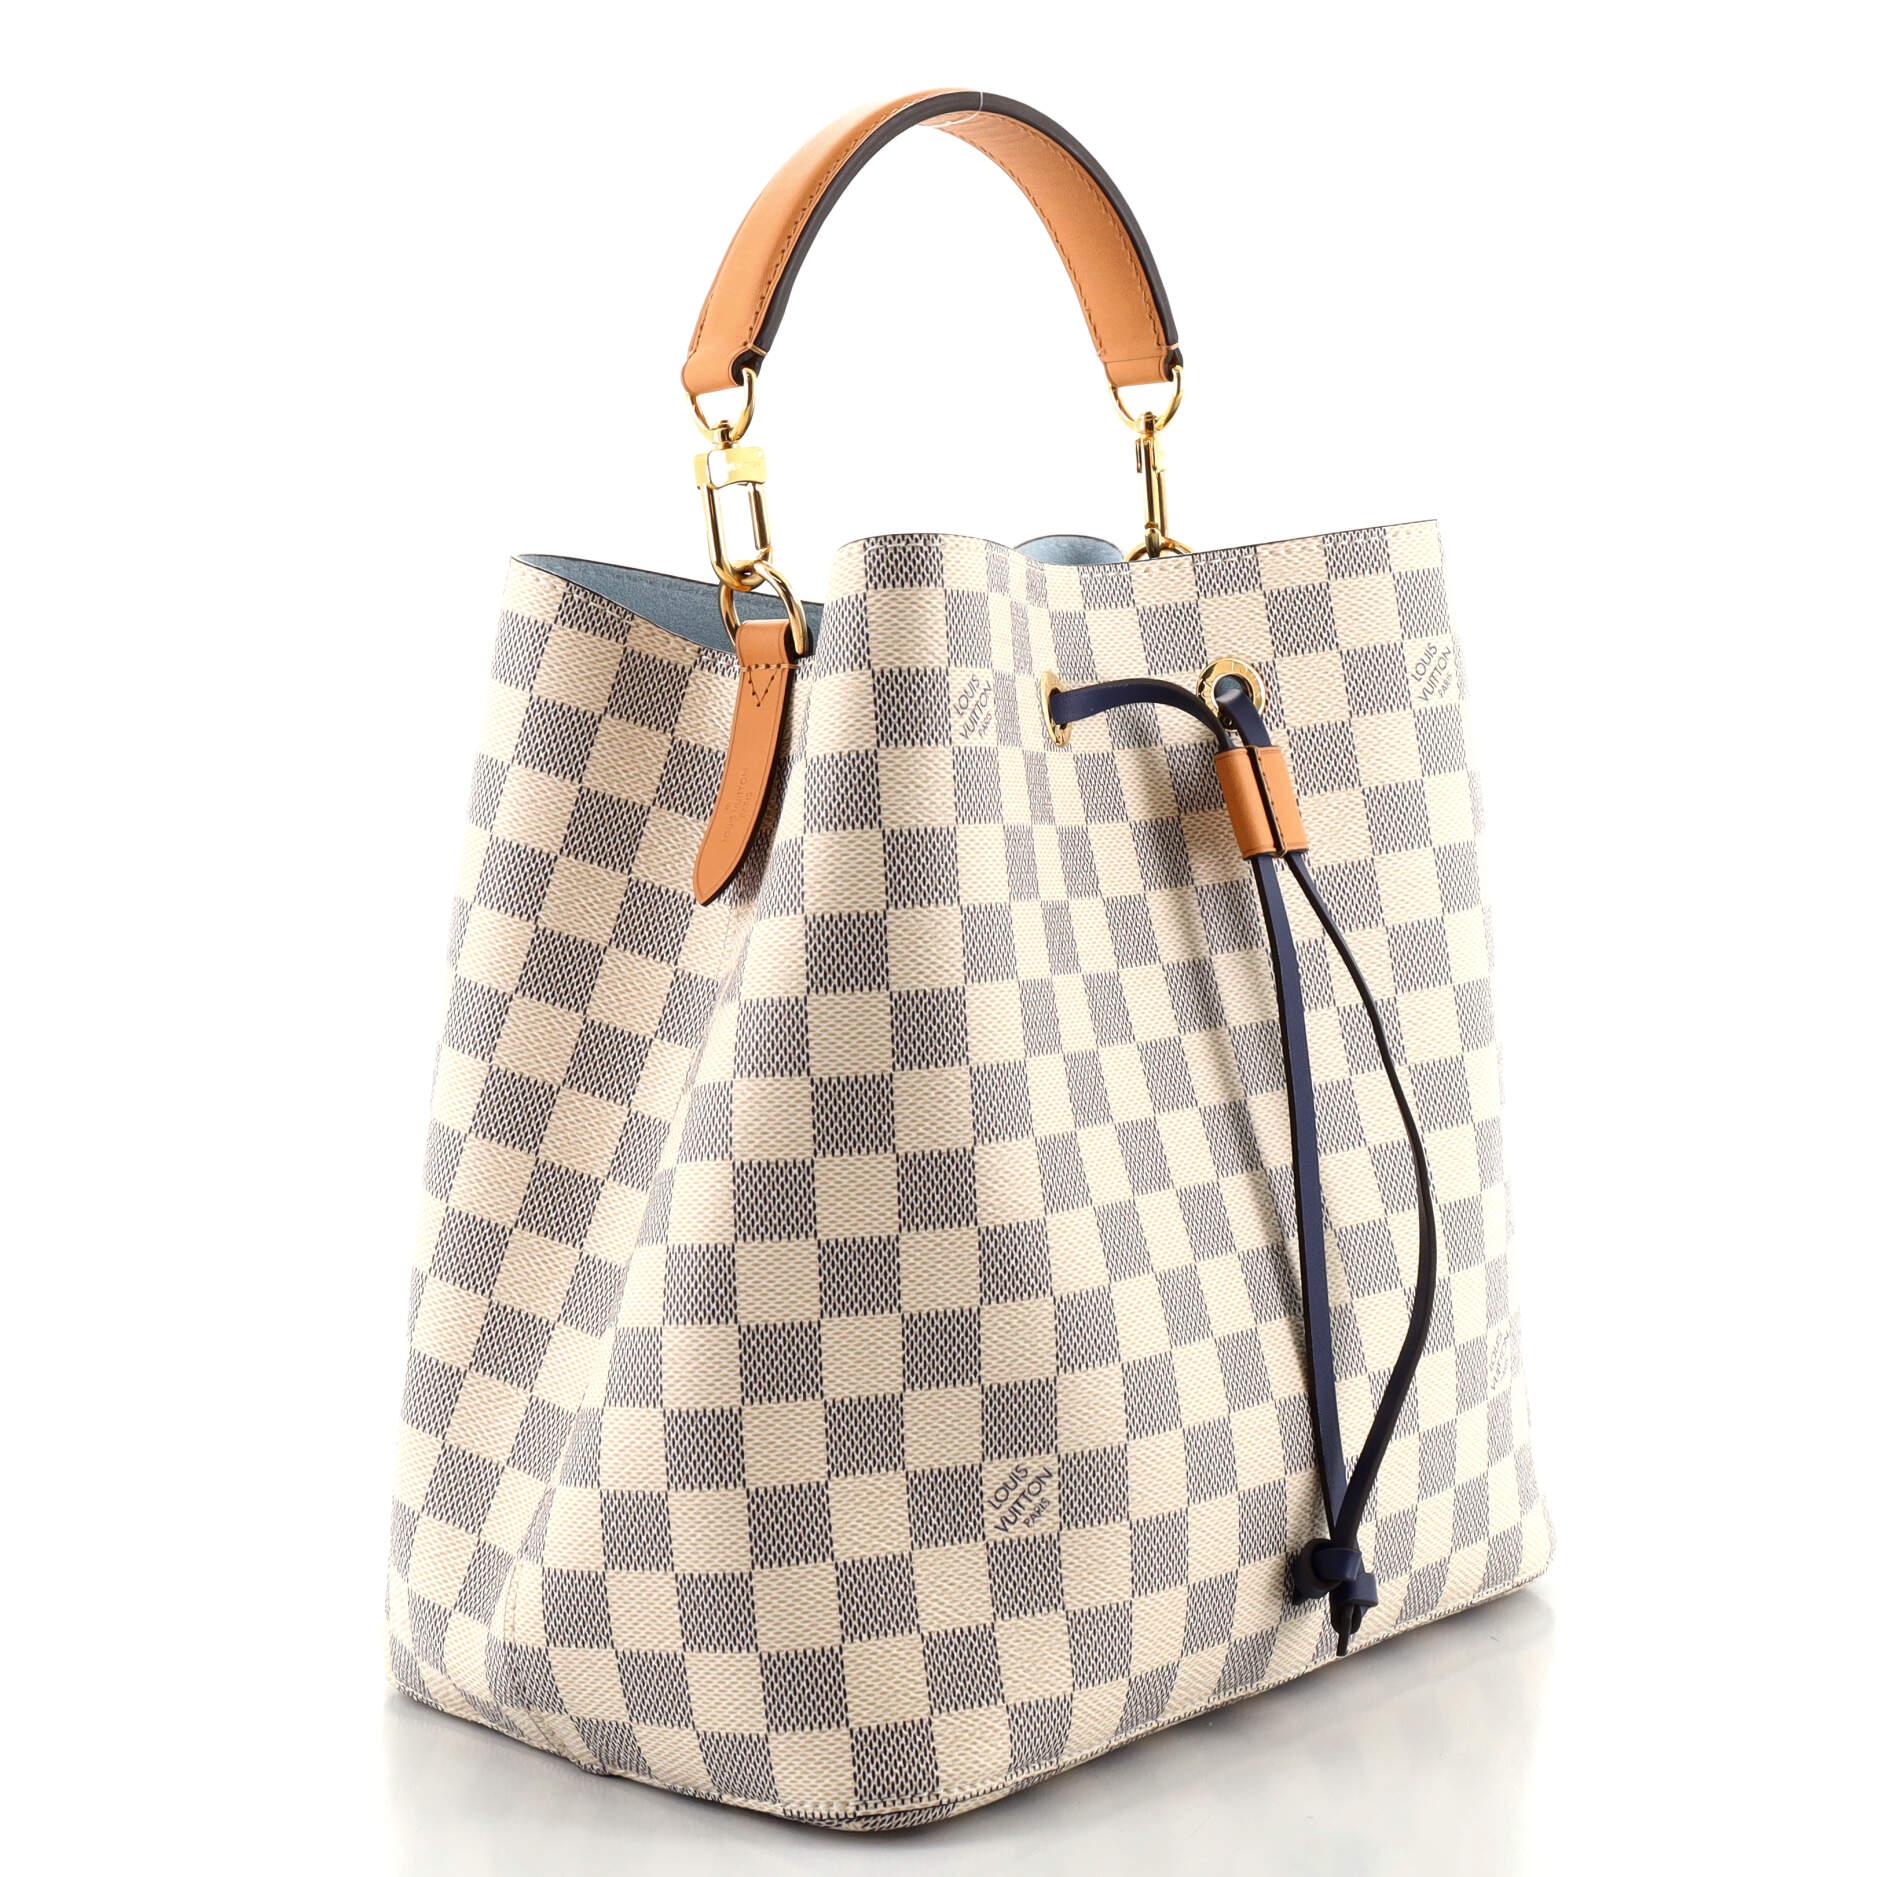 Mm Purse Brand - 145 For Sale on 1stDibs  mm bag brand, mm purse logo, mm  purse designer